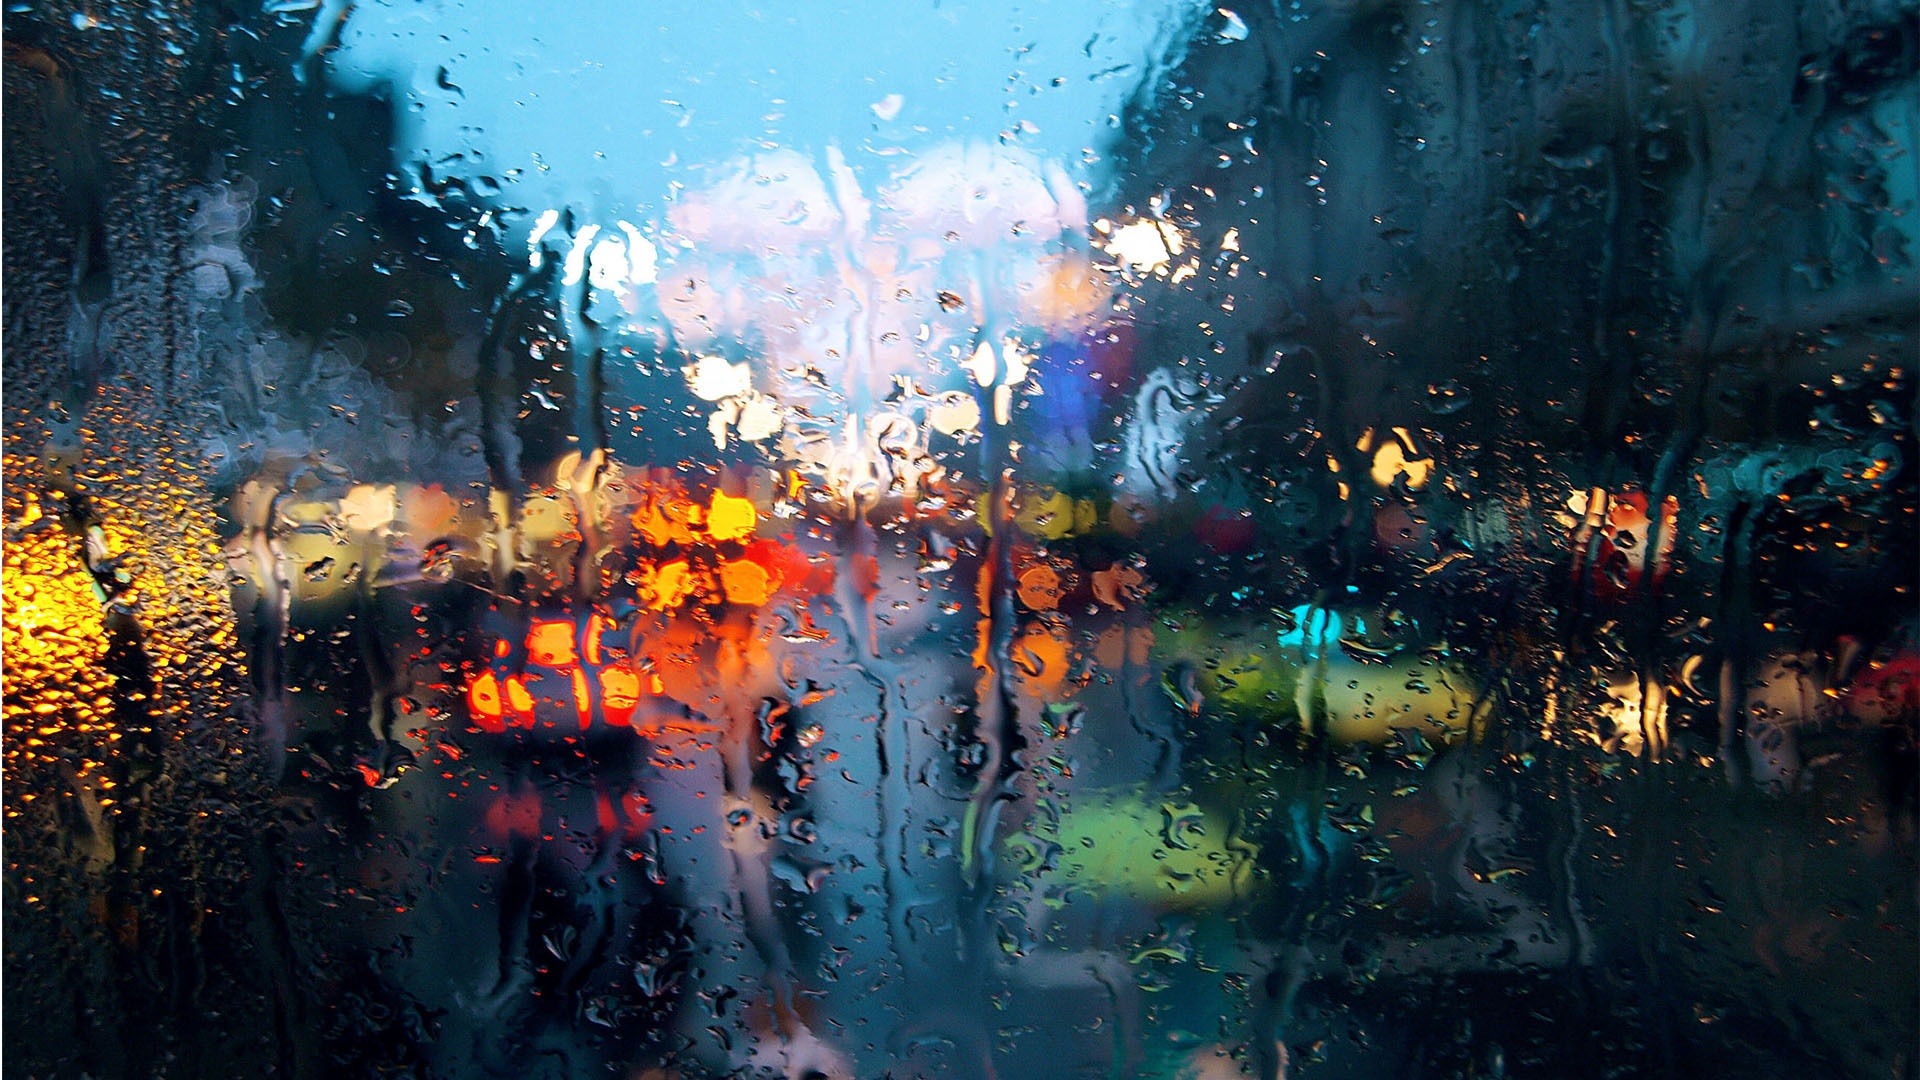 Rain City HD Wallpaper Background Image